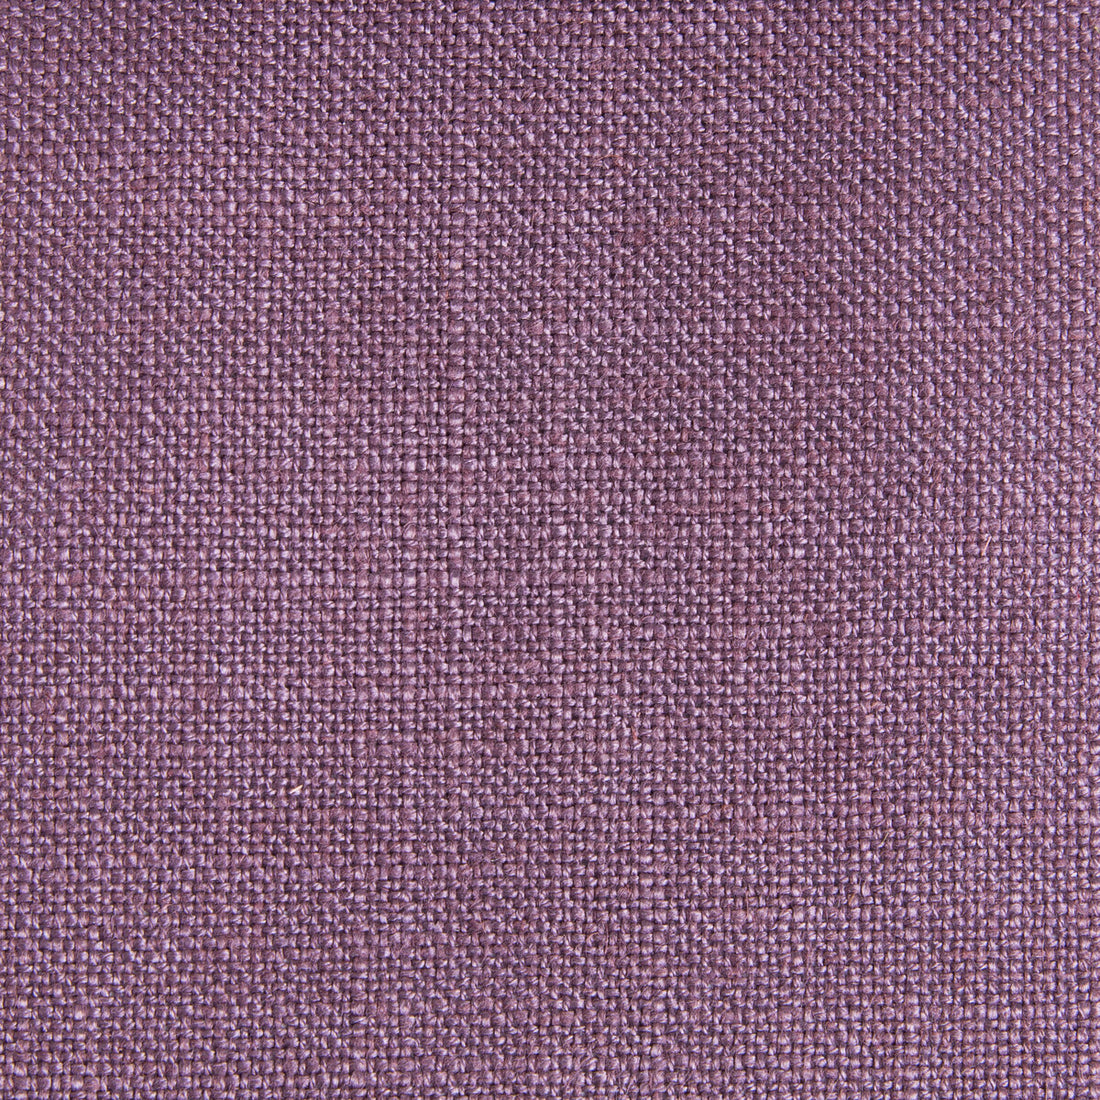 Peru fabric in lavanda color - pattern GDT5548.028.0 - by Gaston y Daniela in the Gaston Nuevo Mundo collection